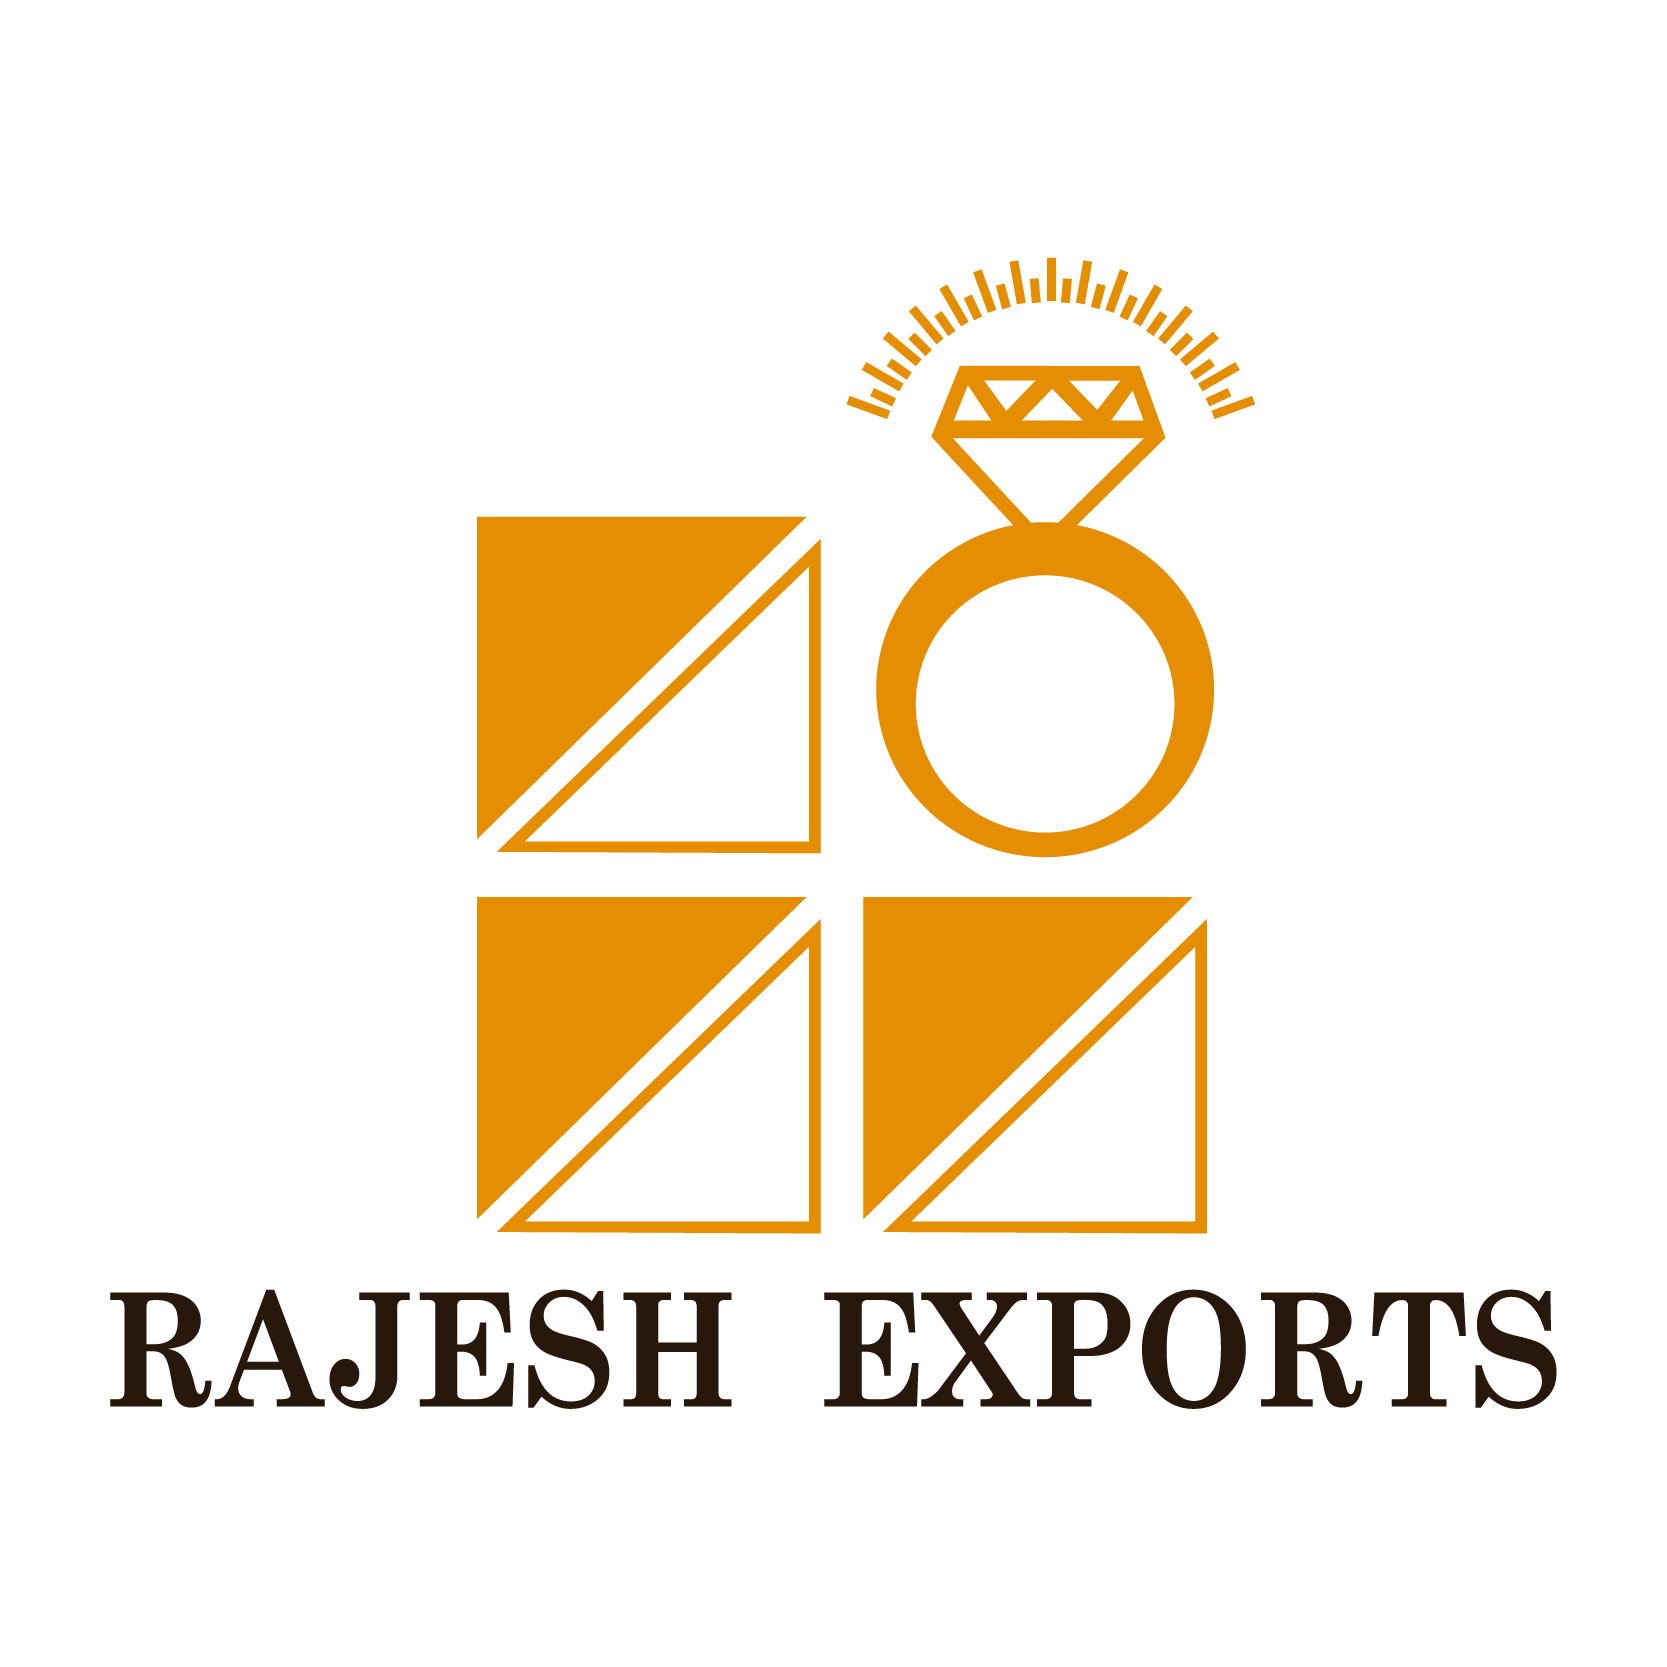 Rajesh Exports Logo png